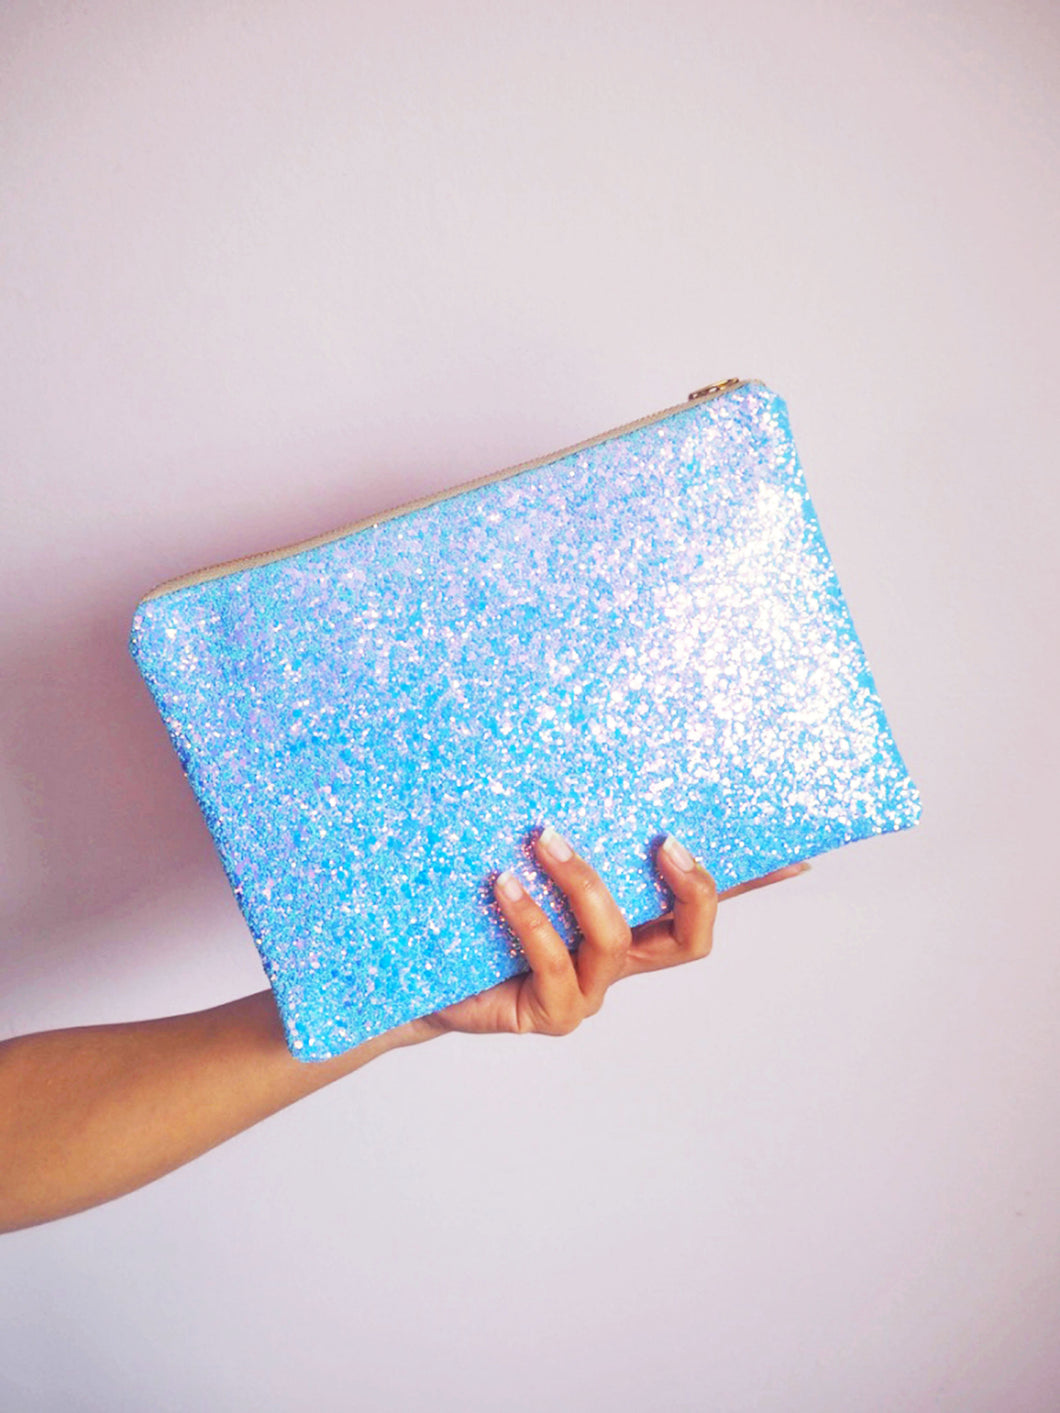 Sparkly Clutch Bag - Shimmering Sea Blue Glitter Clutch Bag - Sparkly Blue Handmade Clutch Bag - Handmade Blue Glitter Clutch Bag For Evening -Blue Glitter Wedding Bag